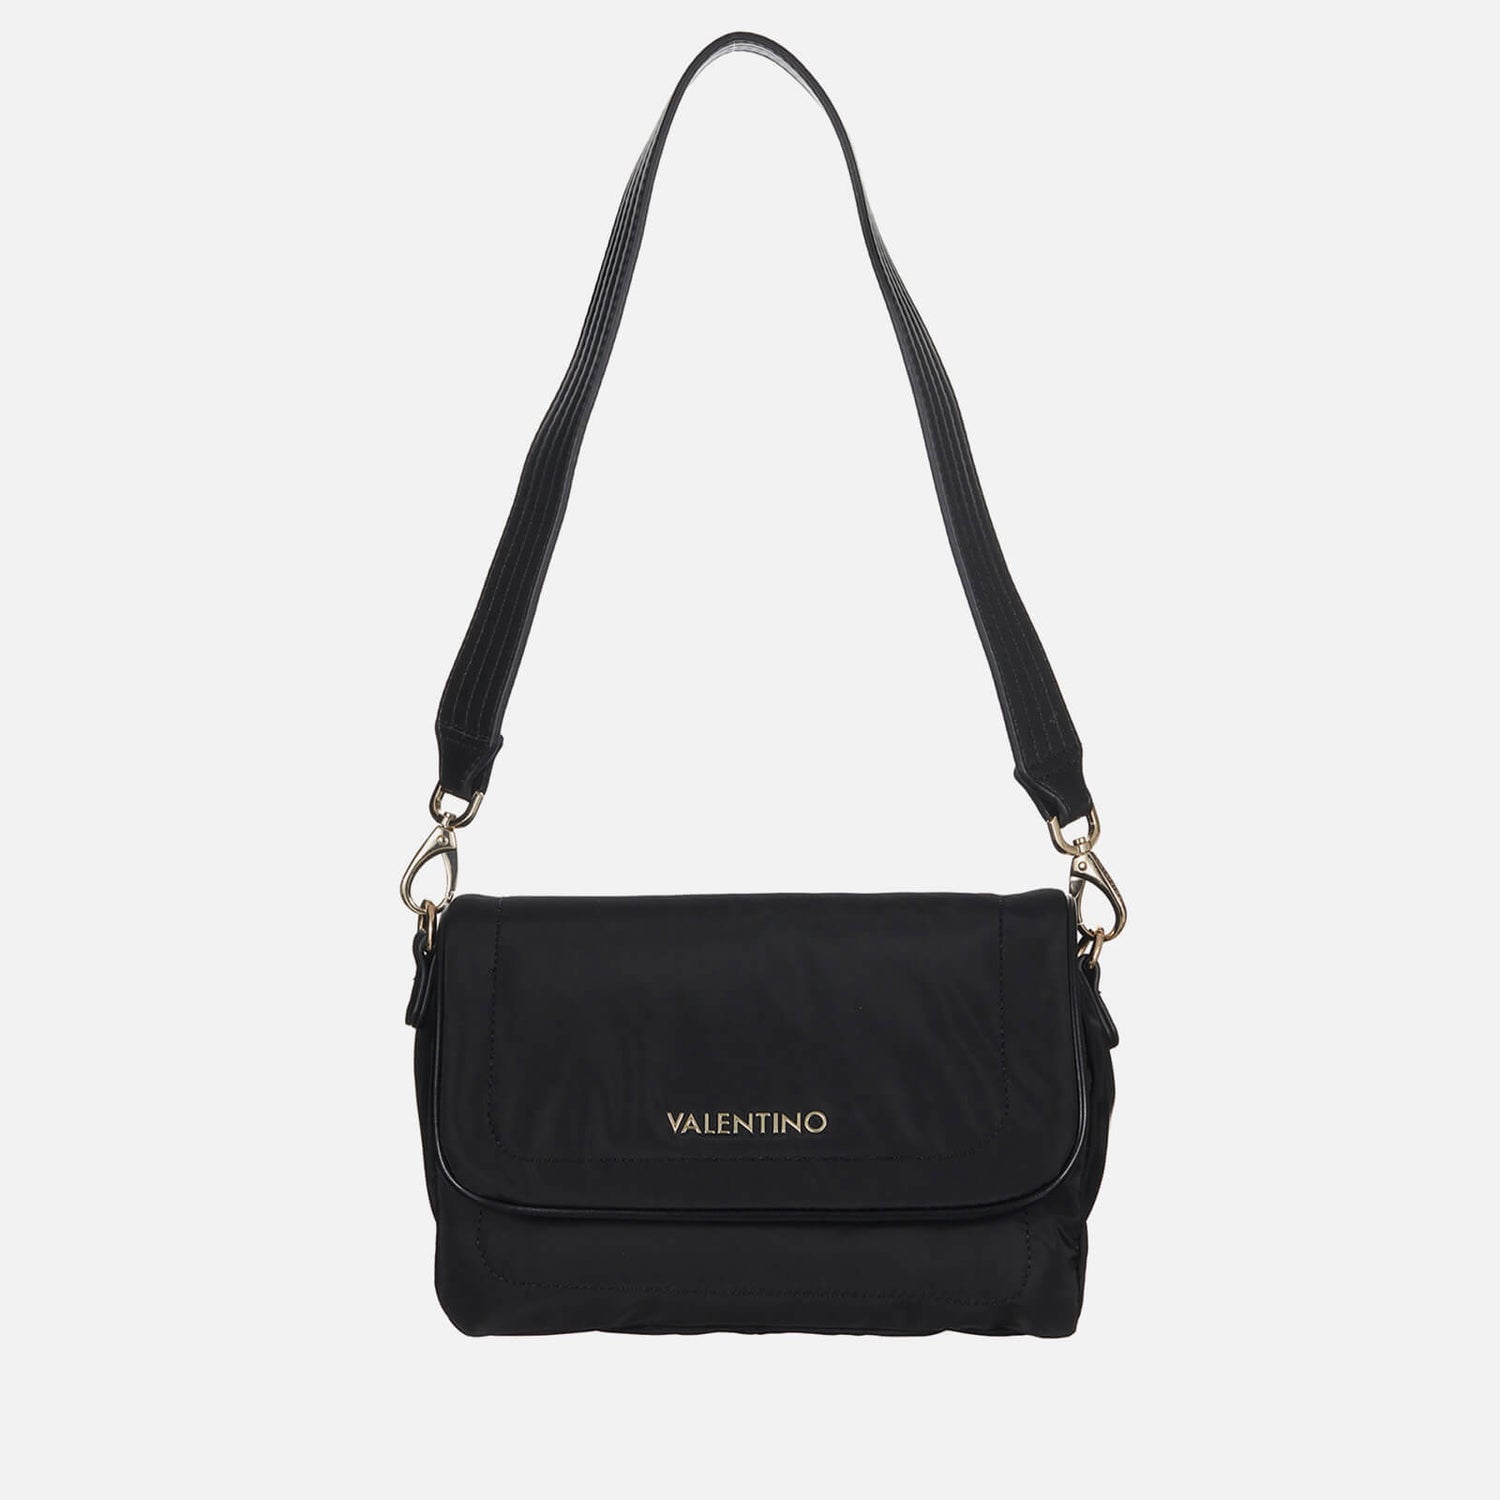 Valentino Bags Women's Olmo Nylon Cross Body Bag - Nero